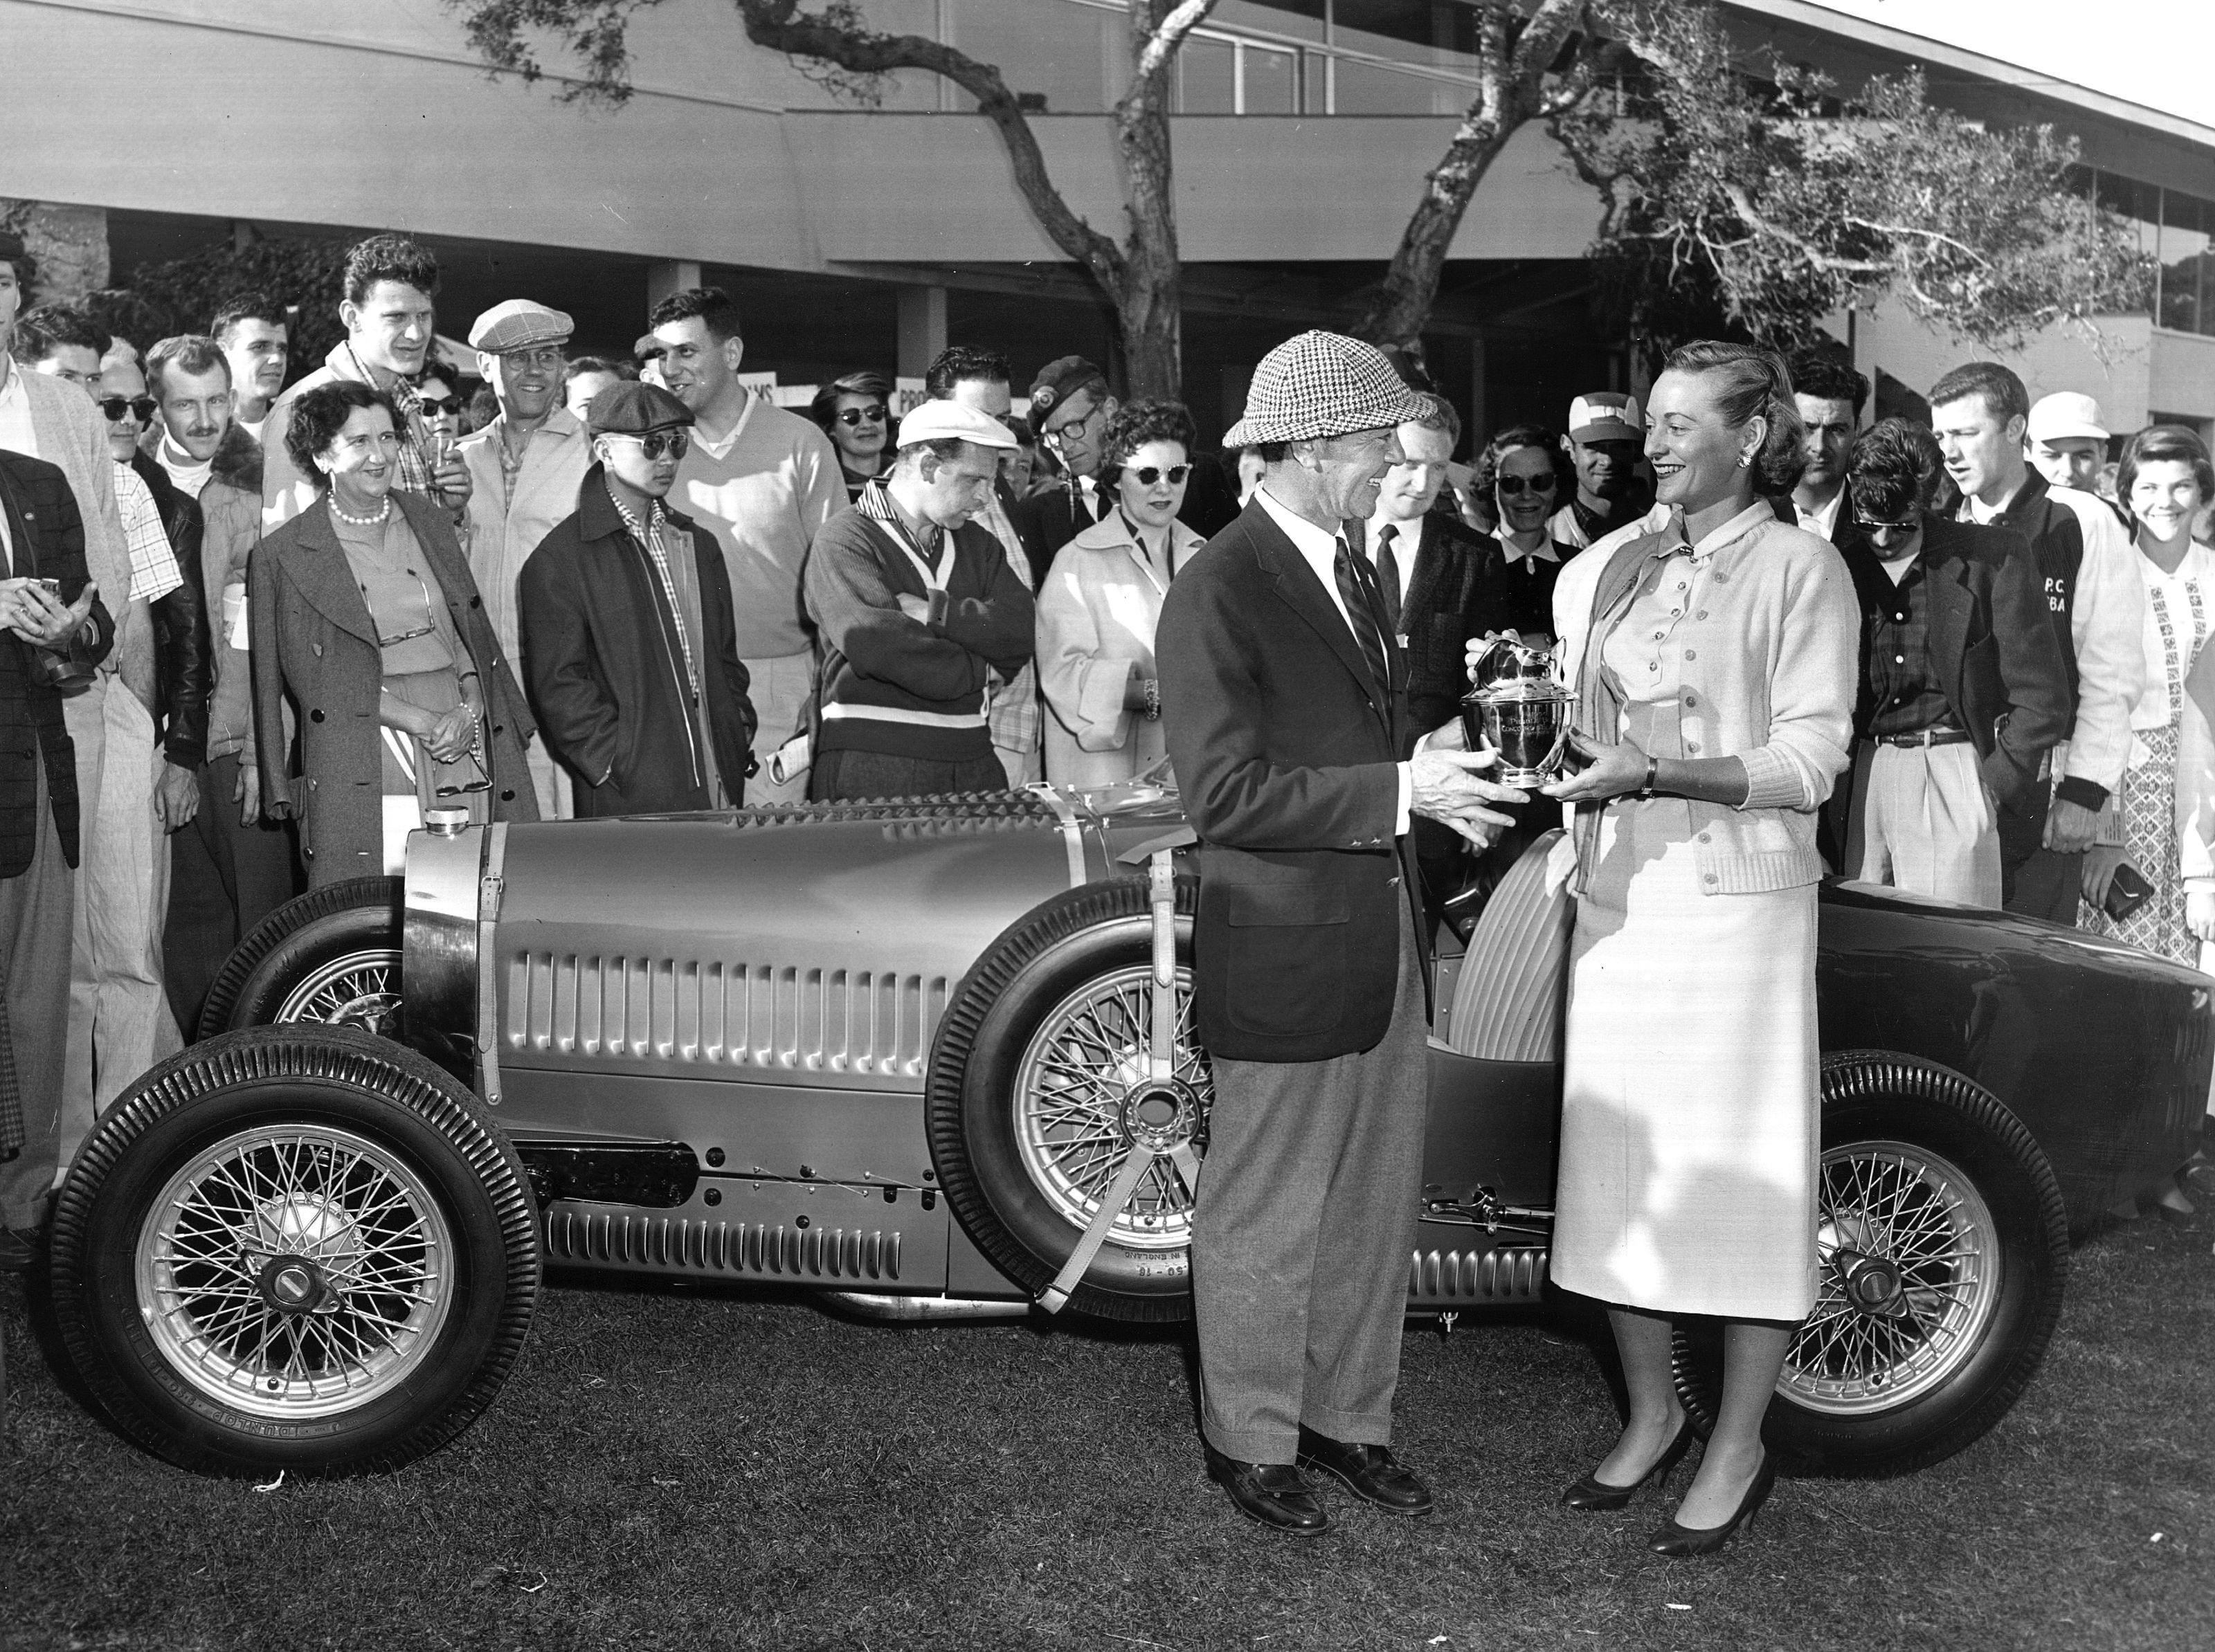 Bugatti Celebrates the 70th Anniversary of the Legendary Pebble Beach Concours d’Elegance